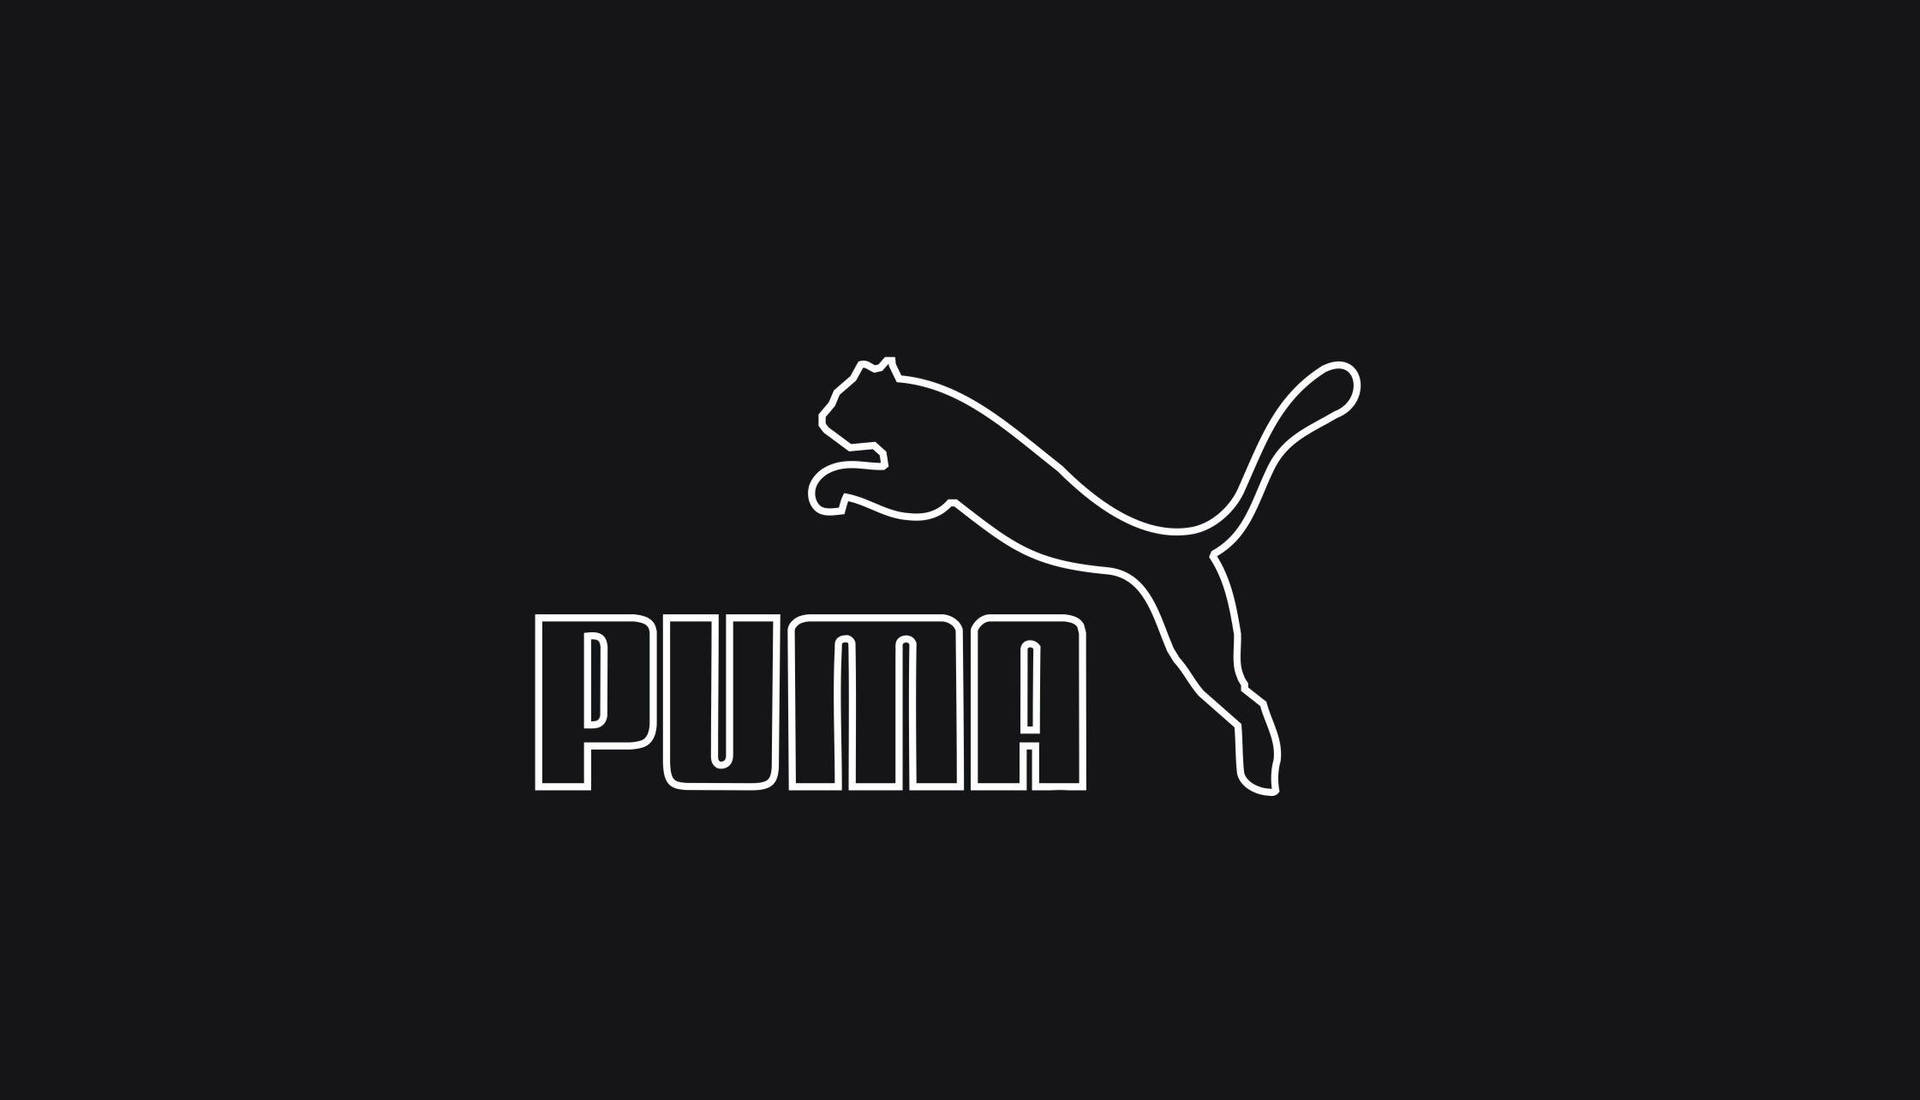 Schwarzeklassische Puma Wallpaper